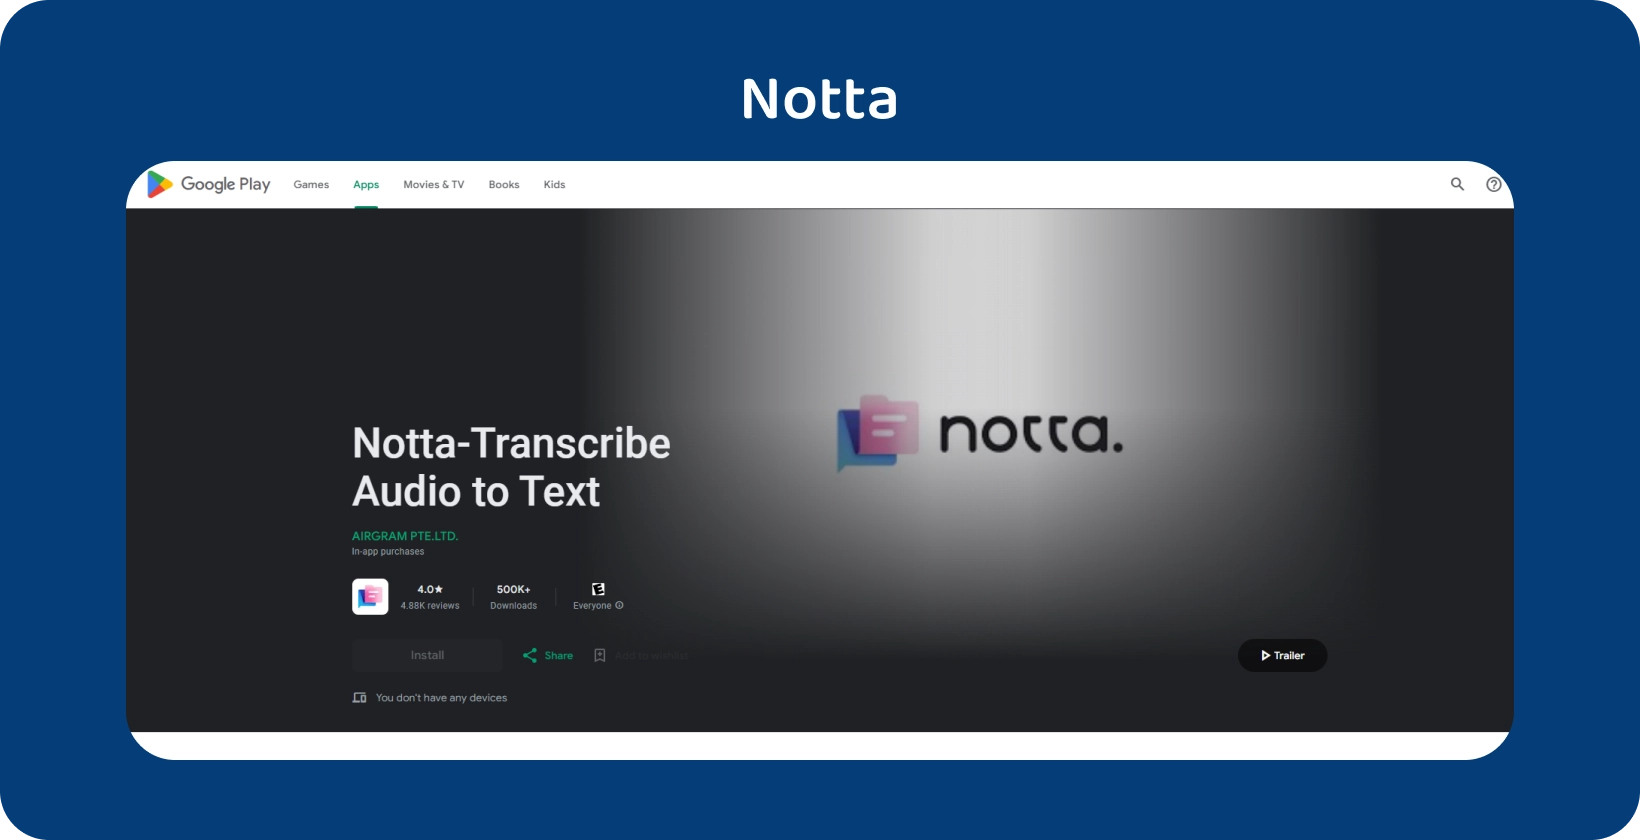 Notta.ai na Google Play, koja pokazuje svoju sposobnost da precizno transkribuje audio na tekst na Android.